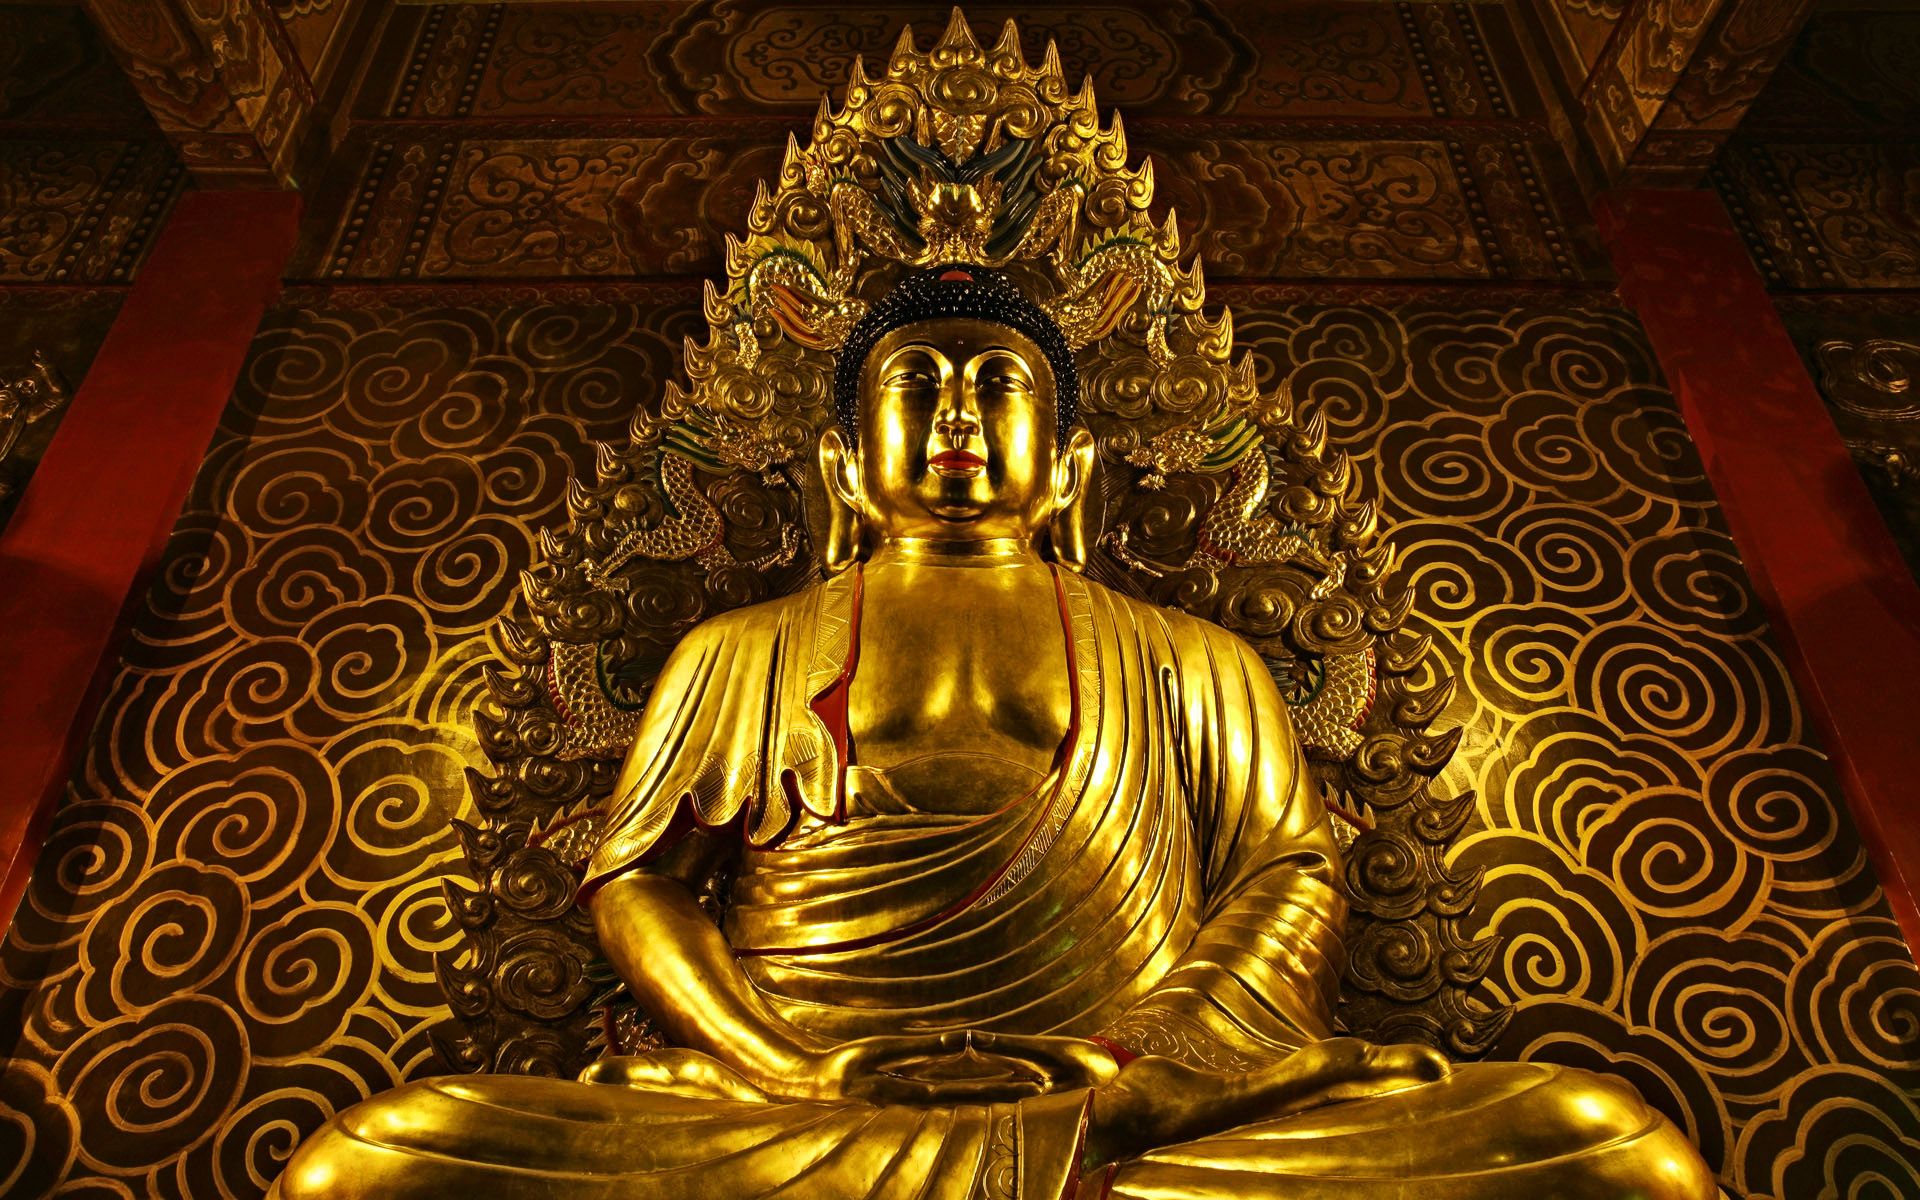 Gold Buddha | GOLD | Pinterest | Buddha, Gold and Shopping